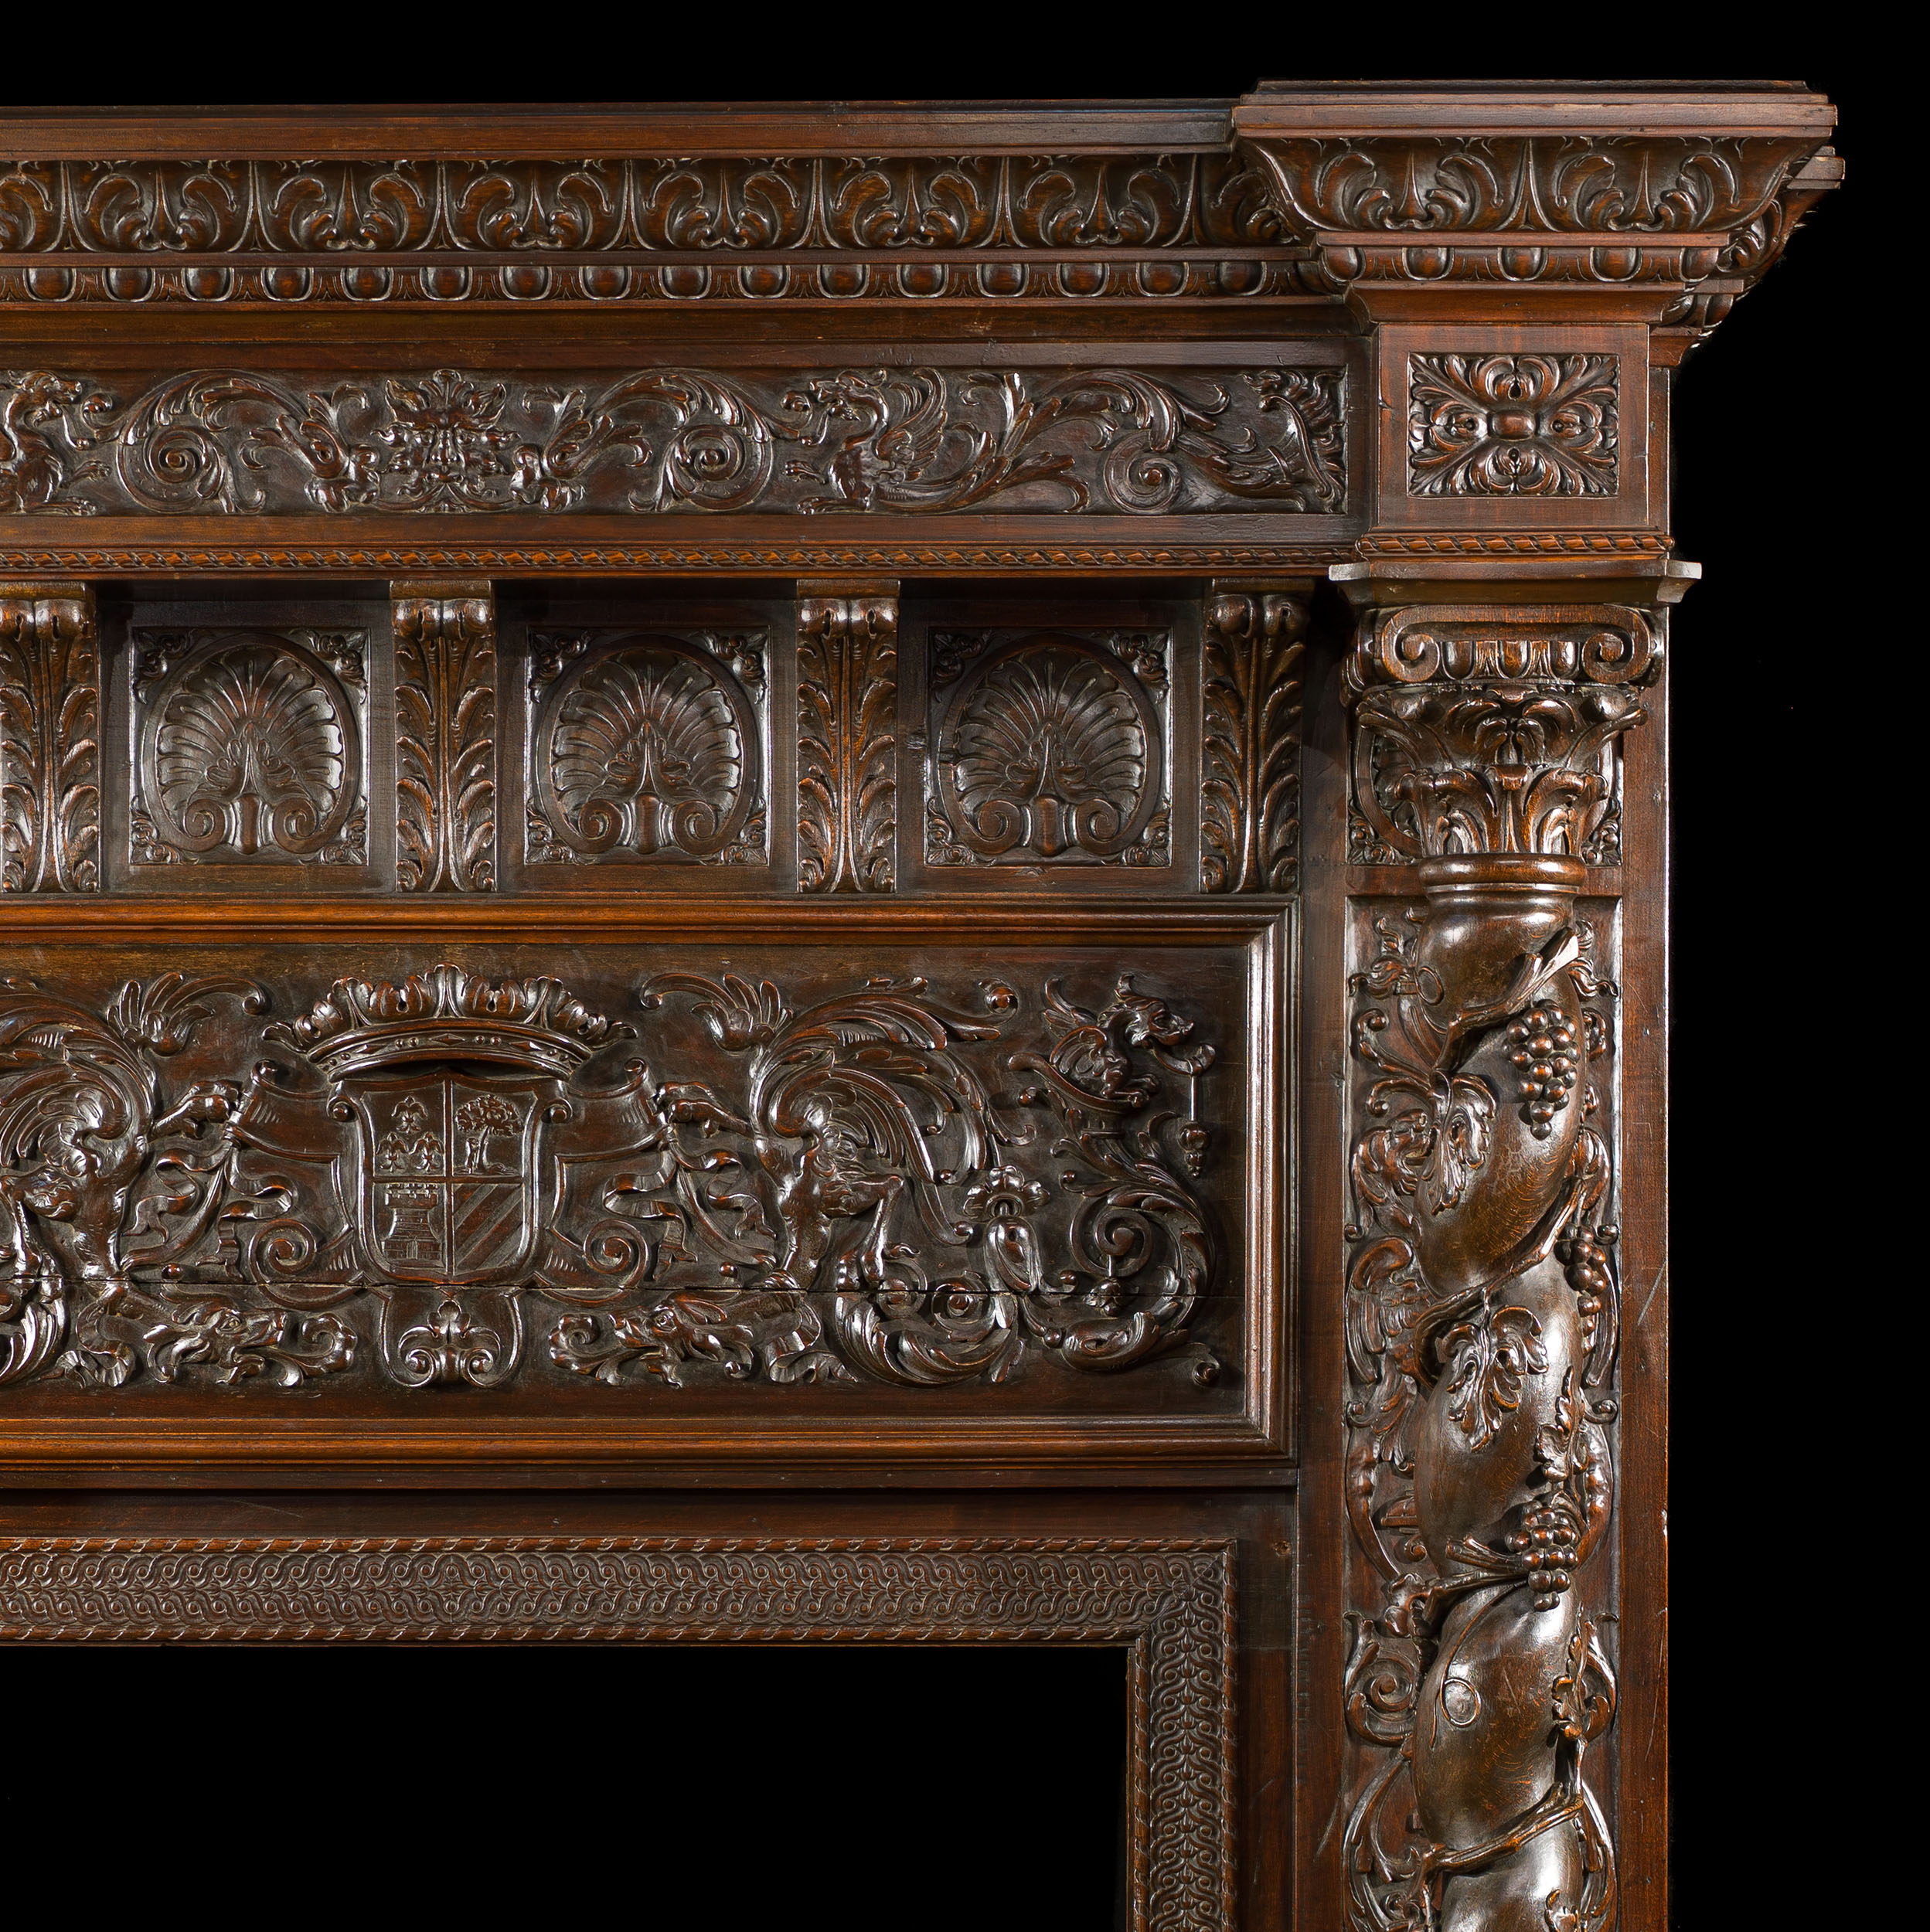 A Italian Renaissance Style Ornate Fireplace